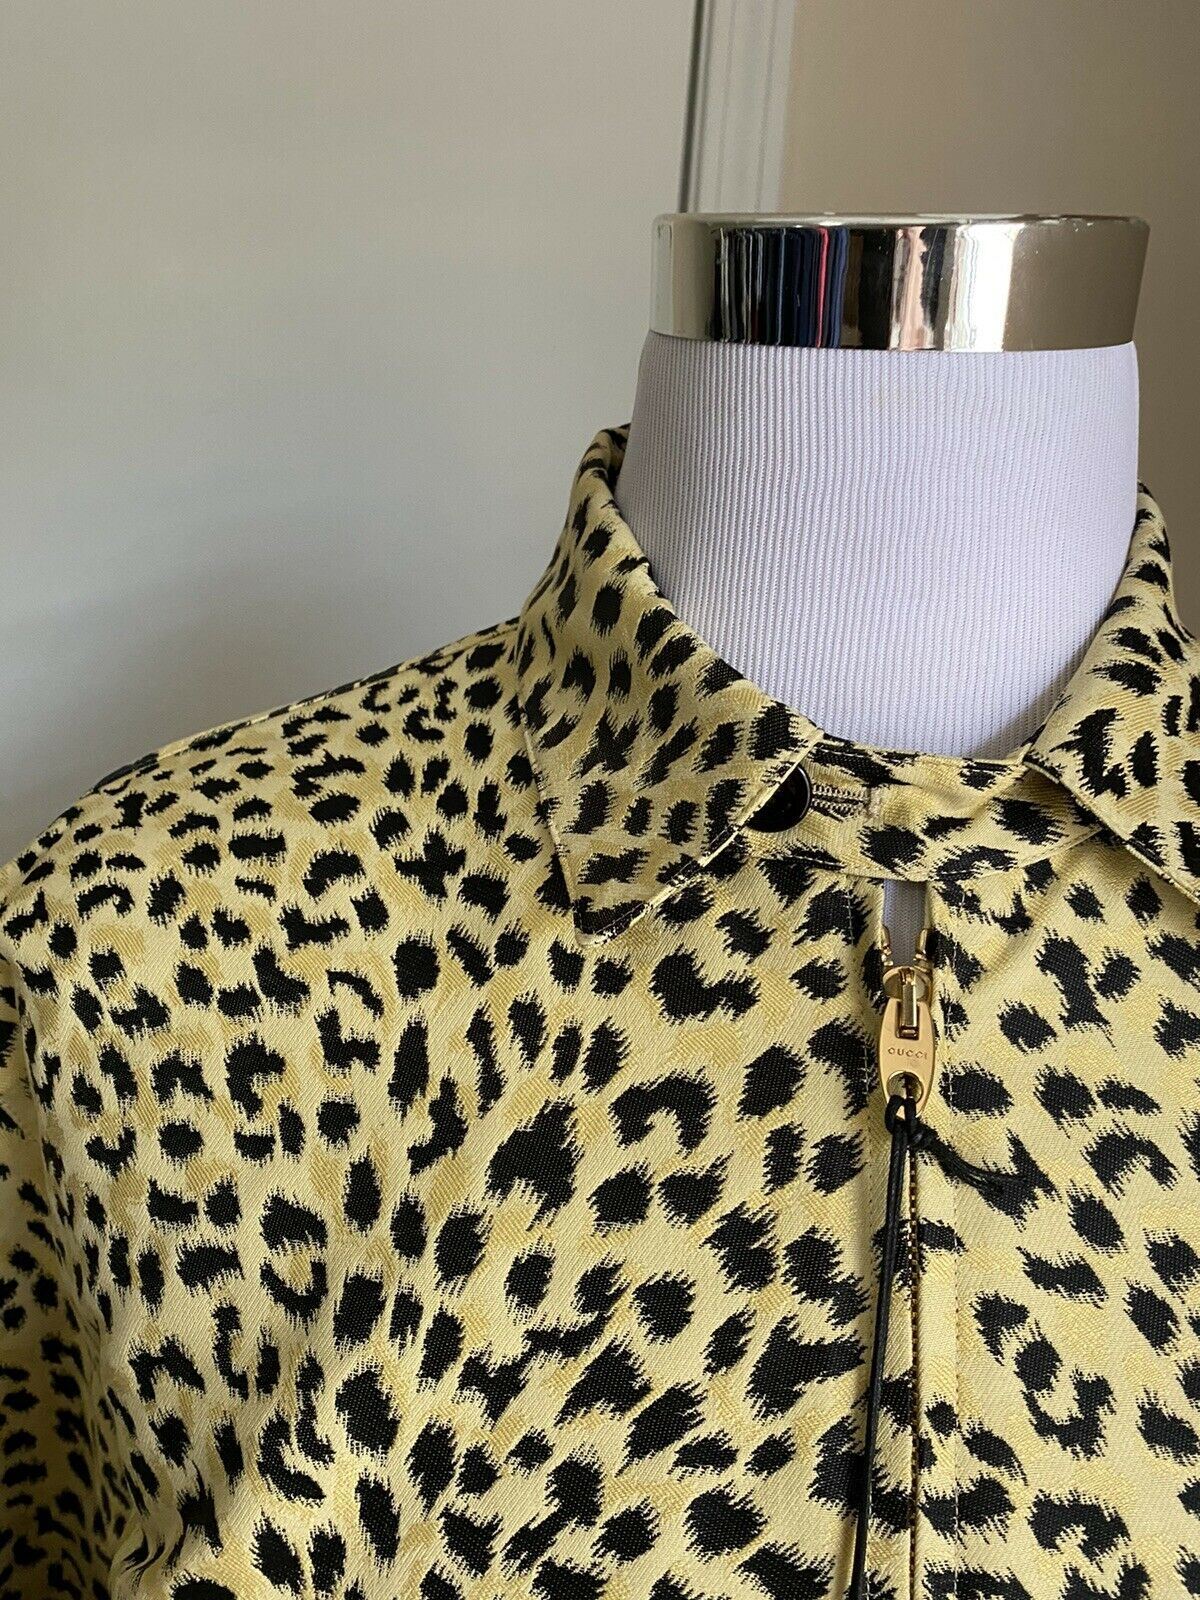 New $2890 Gucci Men’s  Jacket Coat Beige/Black Size L